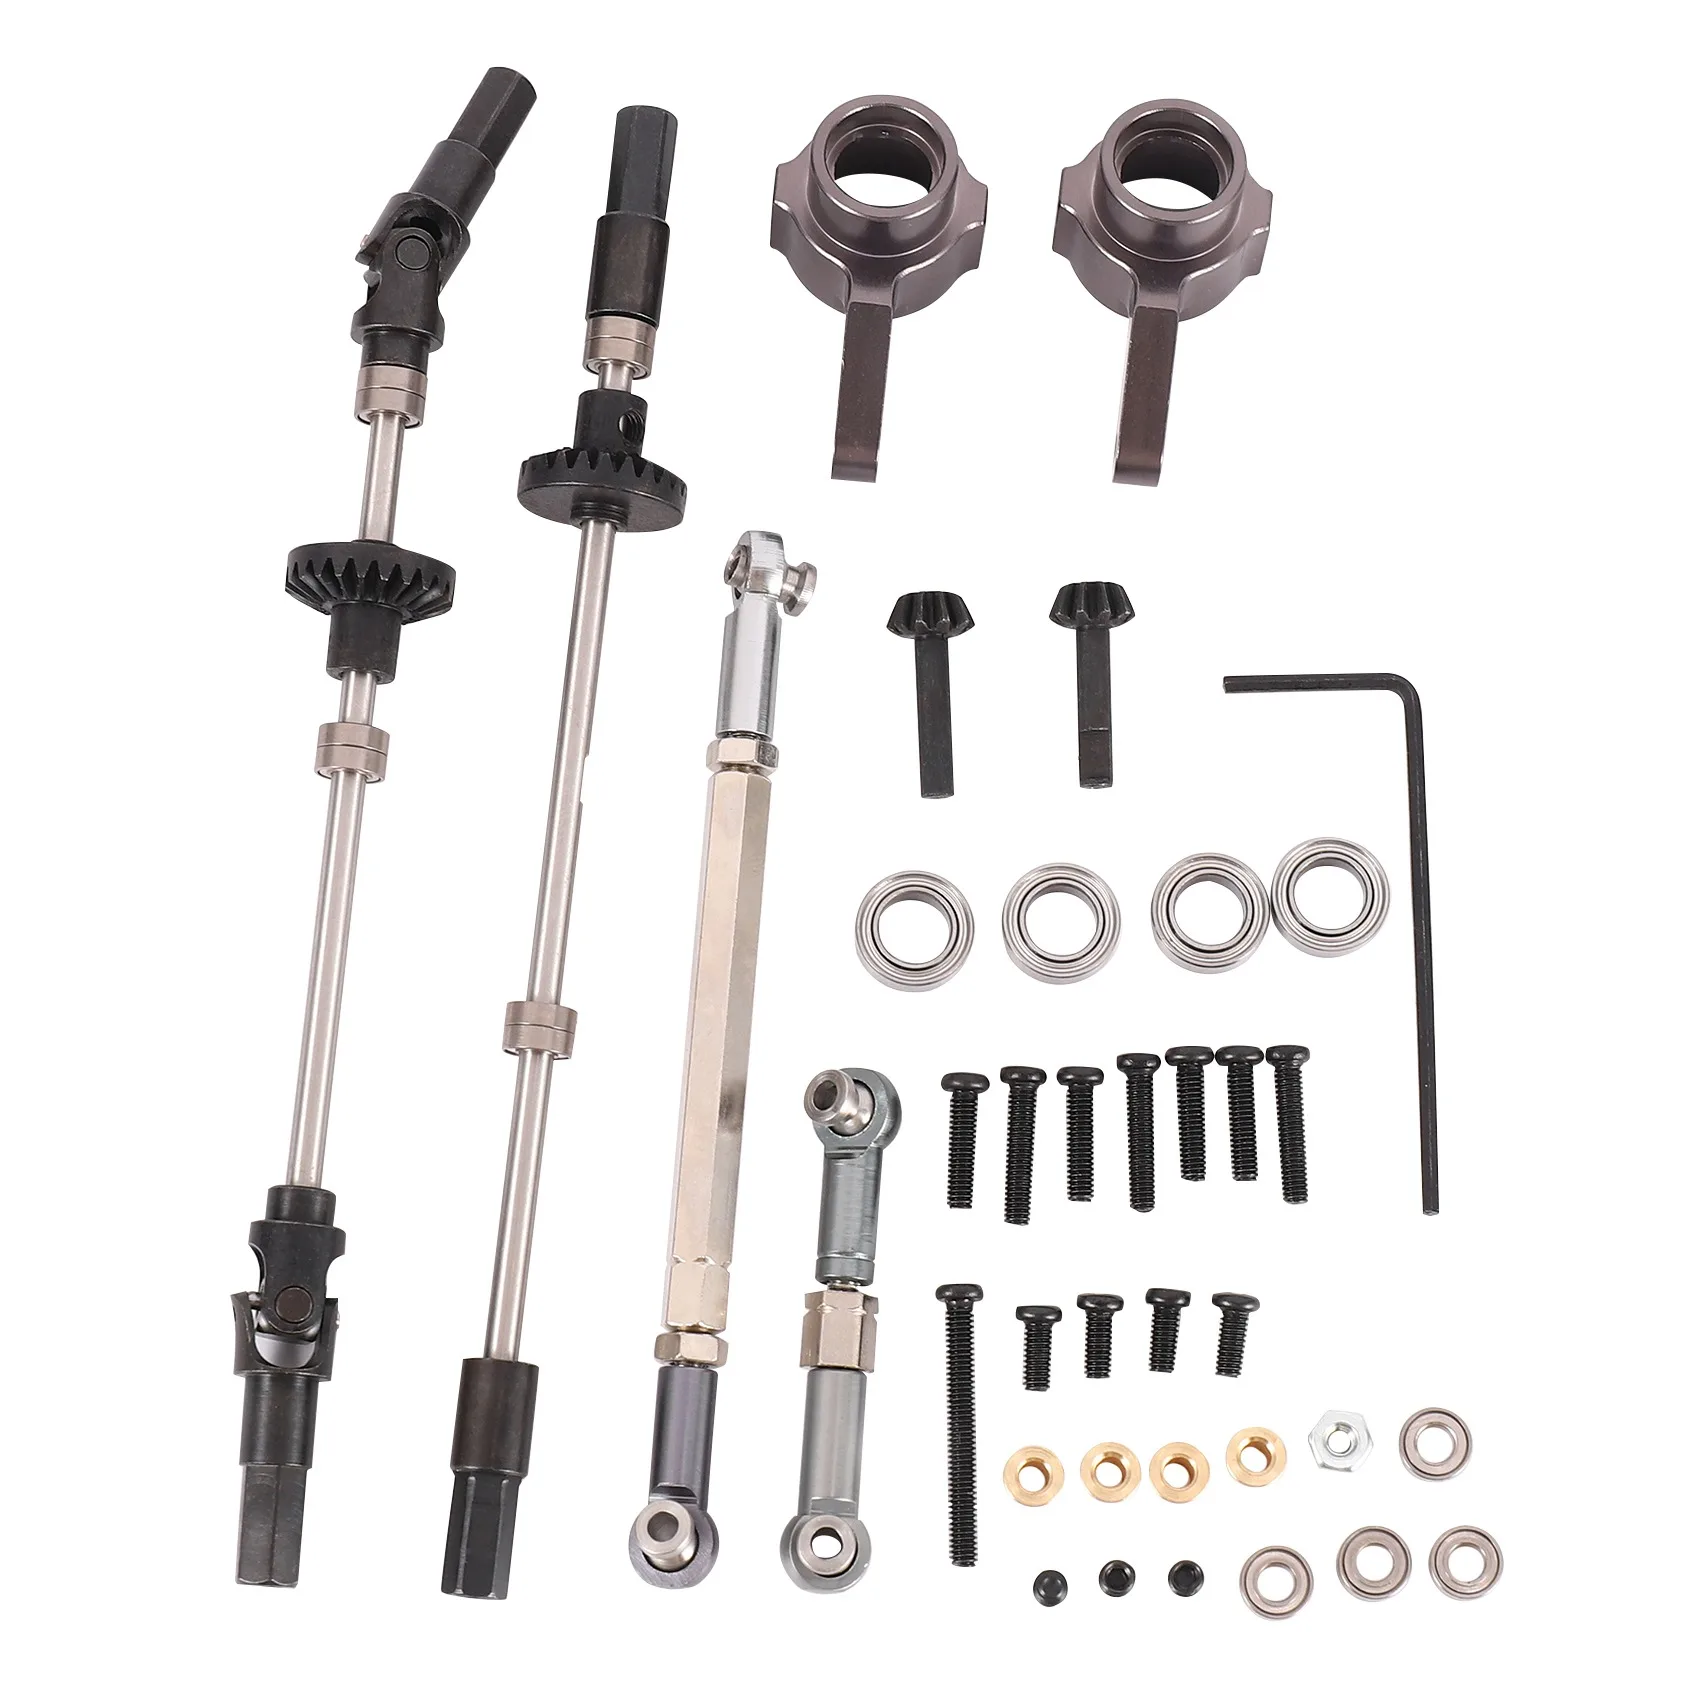 

Upgrade Steel Gear Bridge Axle Gears for WPL B14 B24 C14 C24 C34 C44 B16 B36 JJRC Q60 1/16 RC Car Spare Parts,4X4